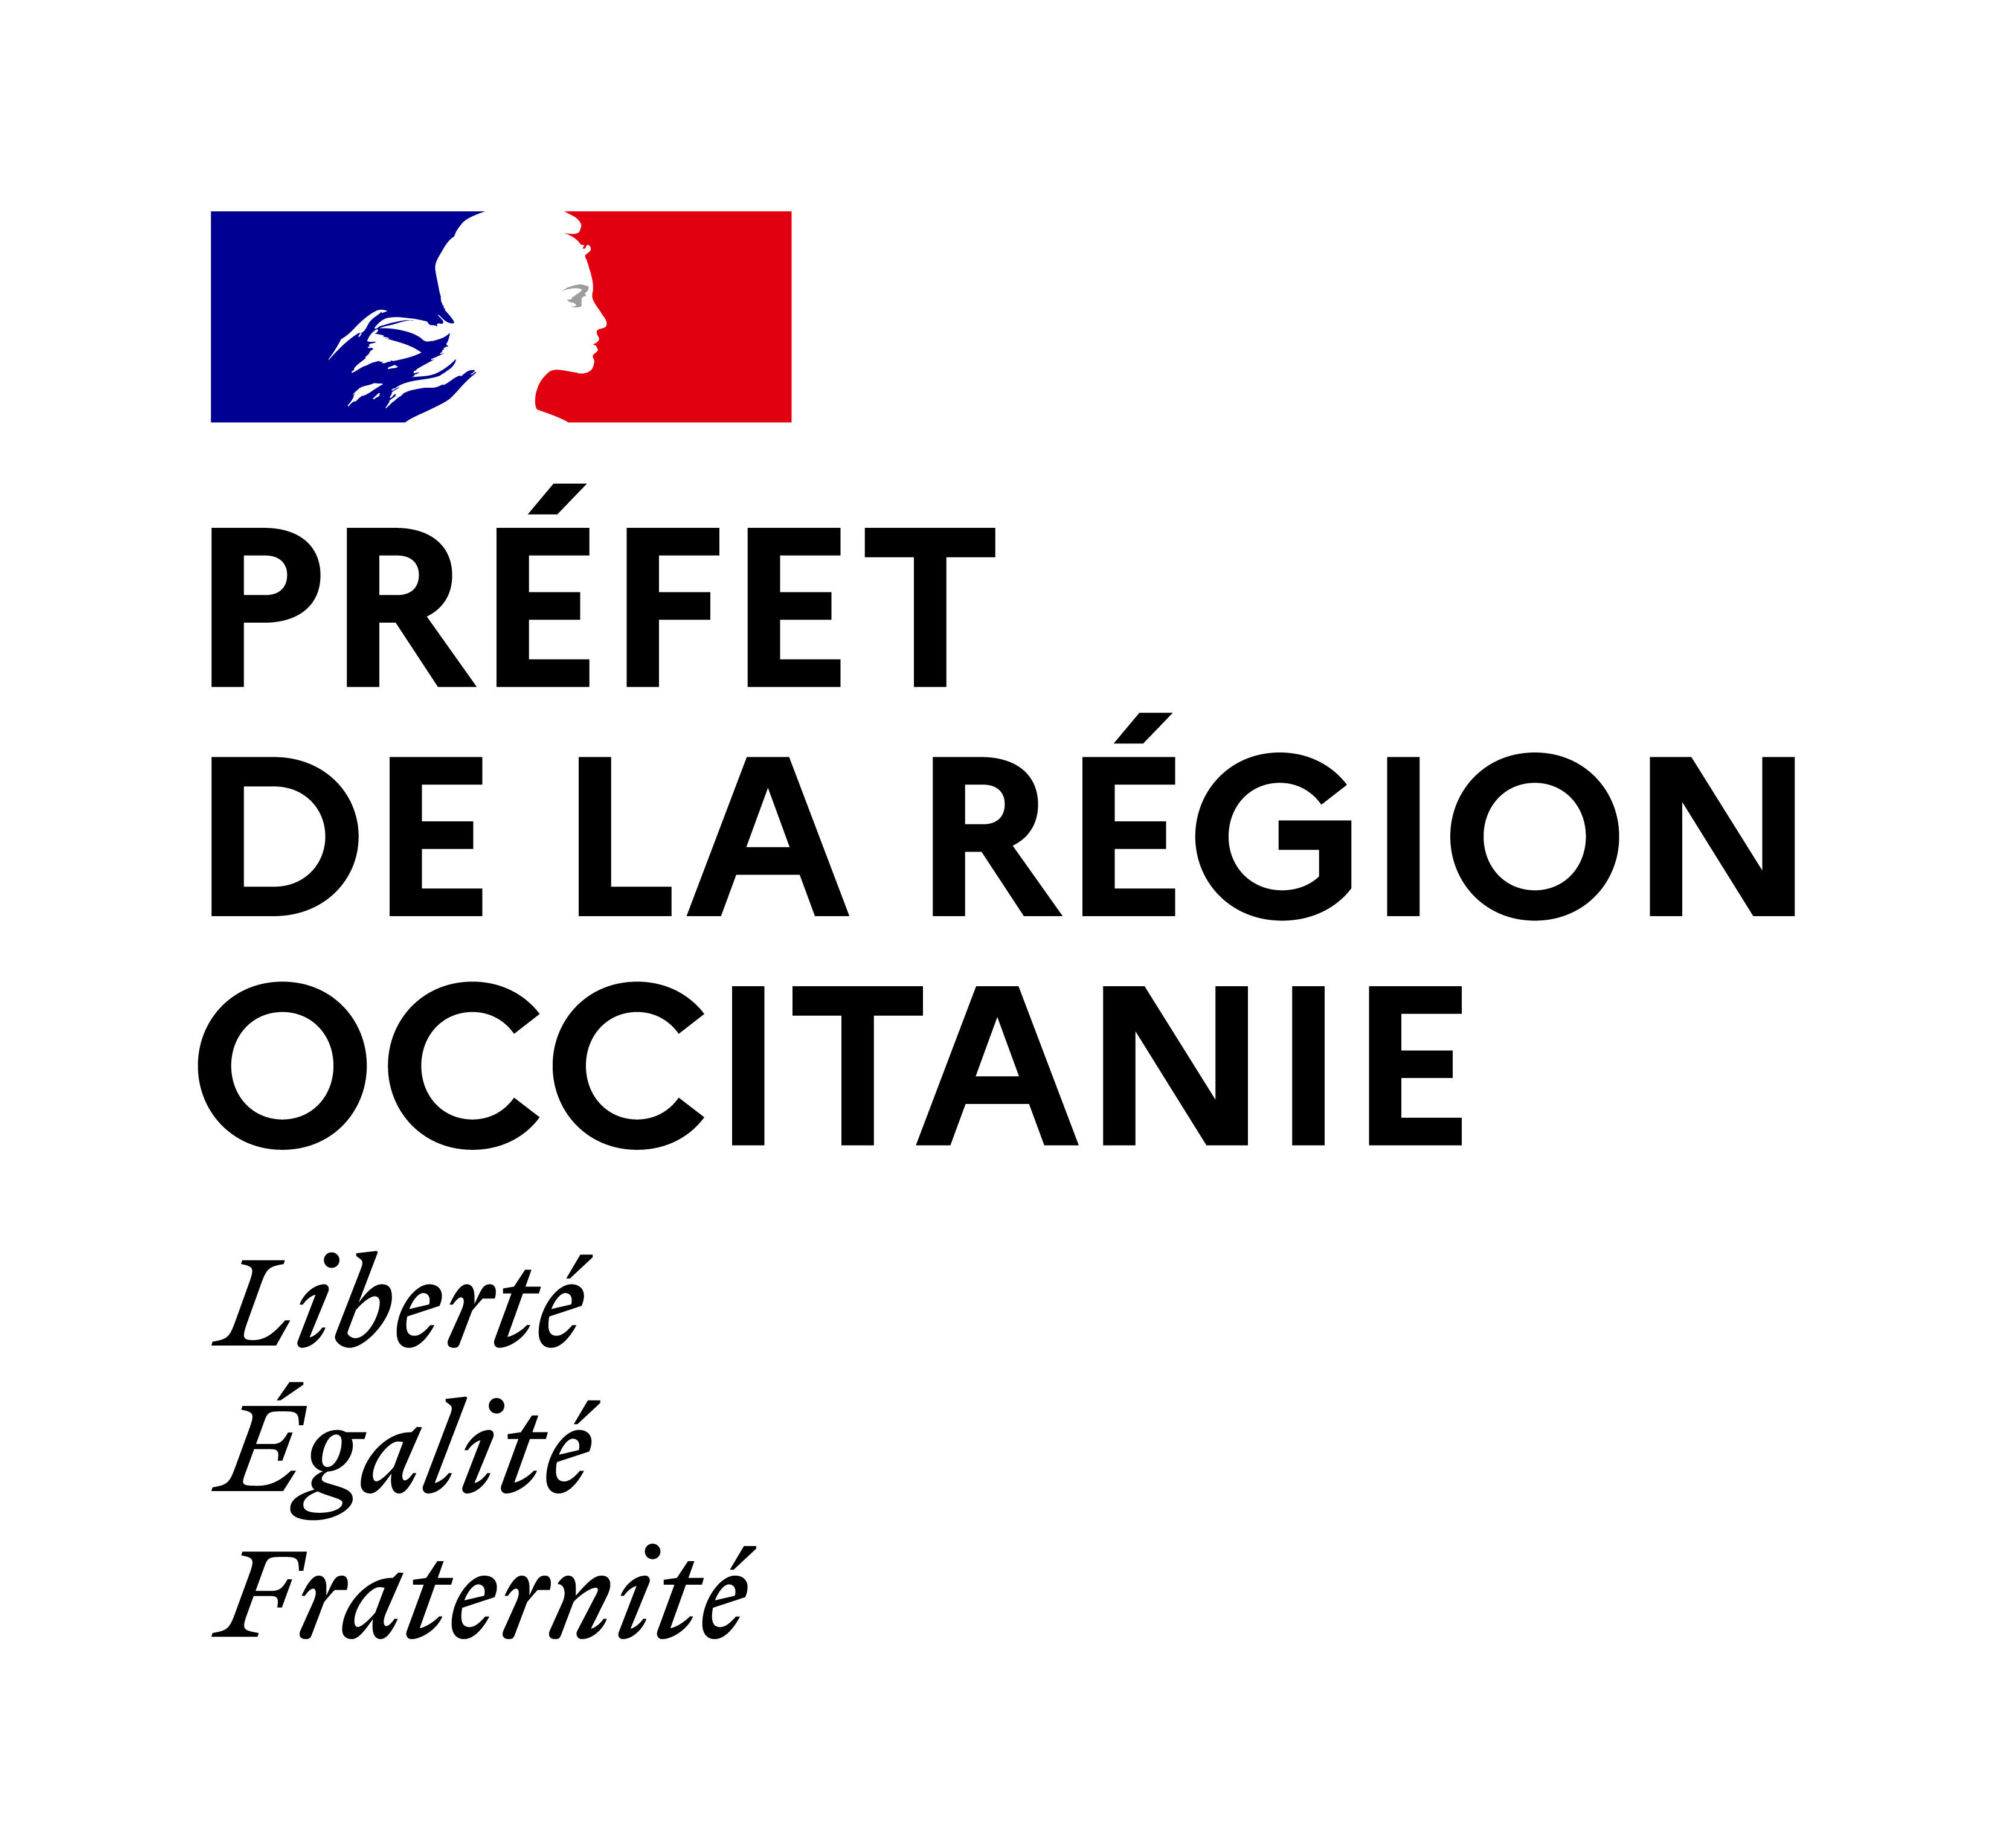 PREF_region_Occitanie_RVB.jpg